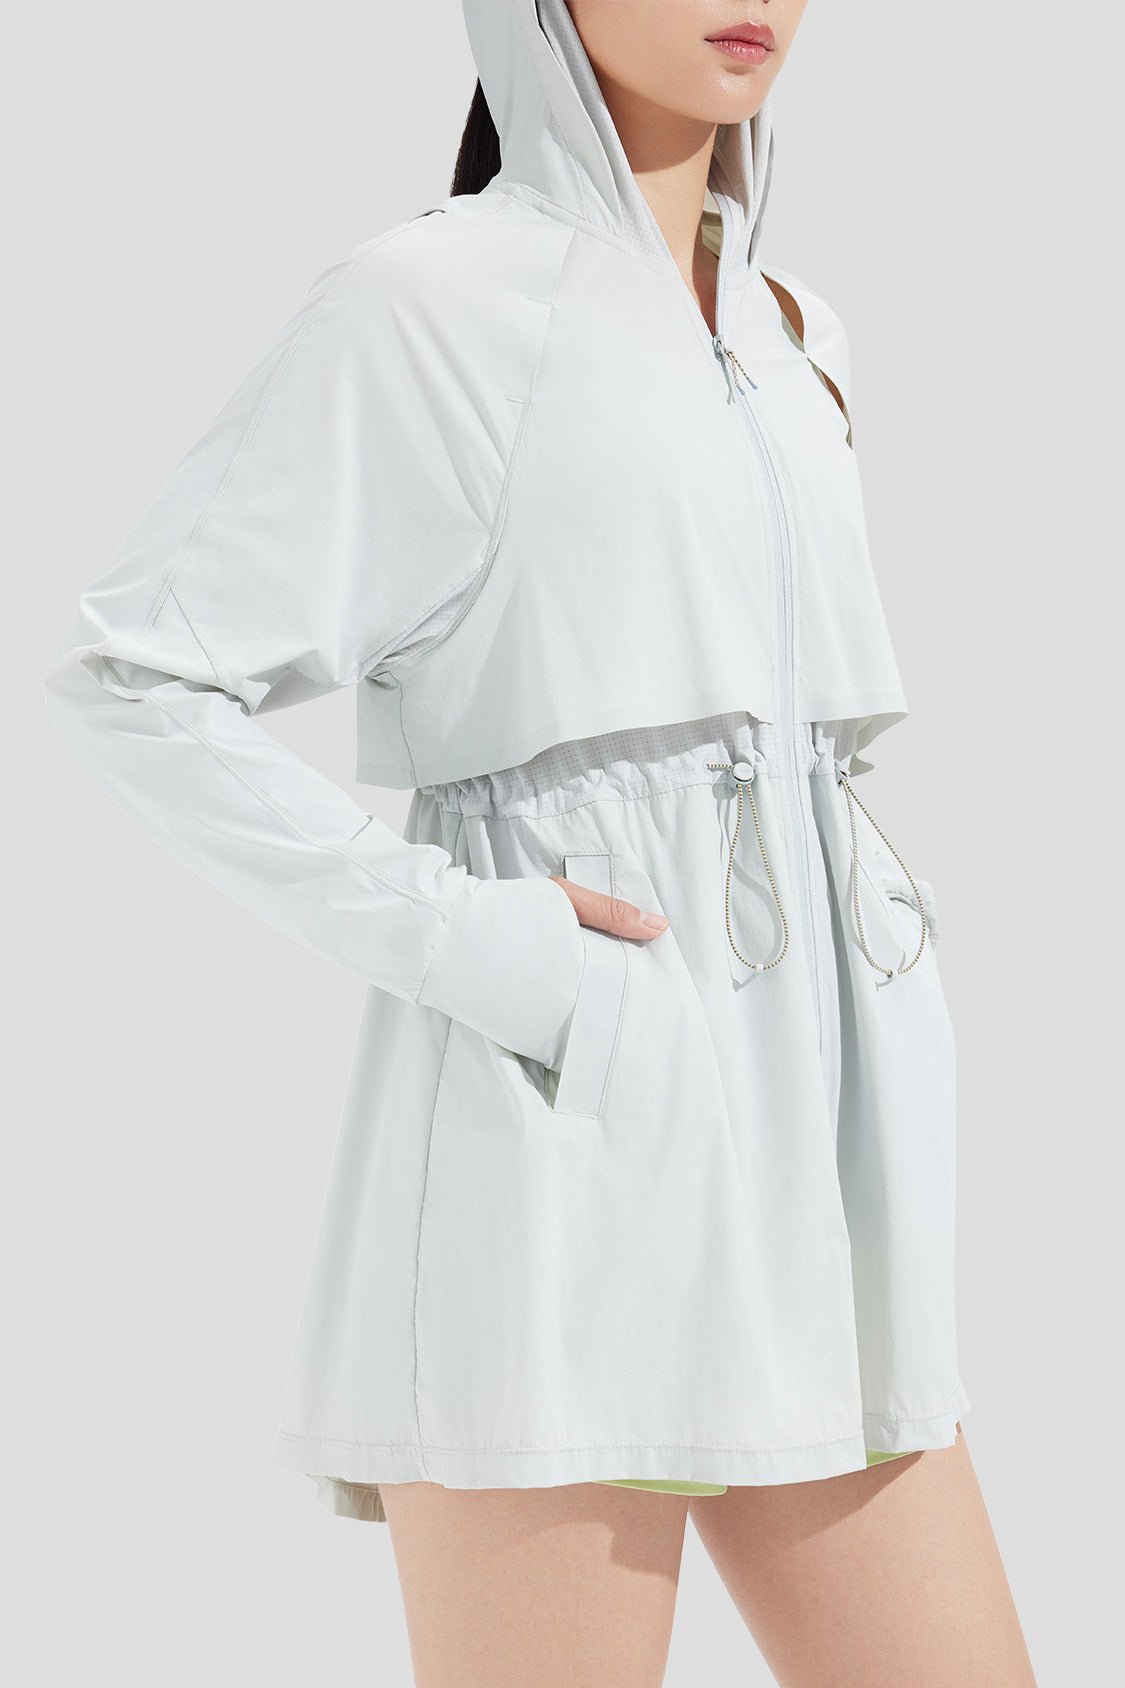 beneunder yunzi yee  women's ultra-lightweight mid-length sun protection clothing UPF50+ #color_galaxy grey